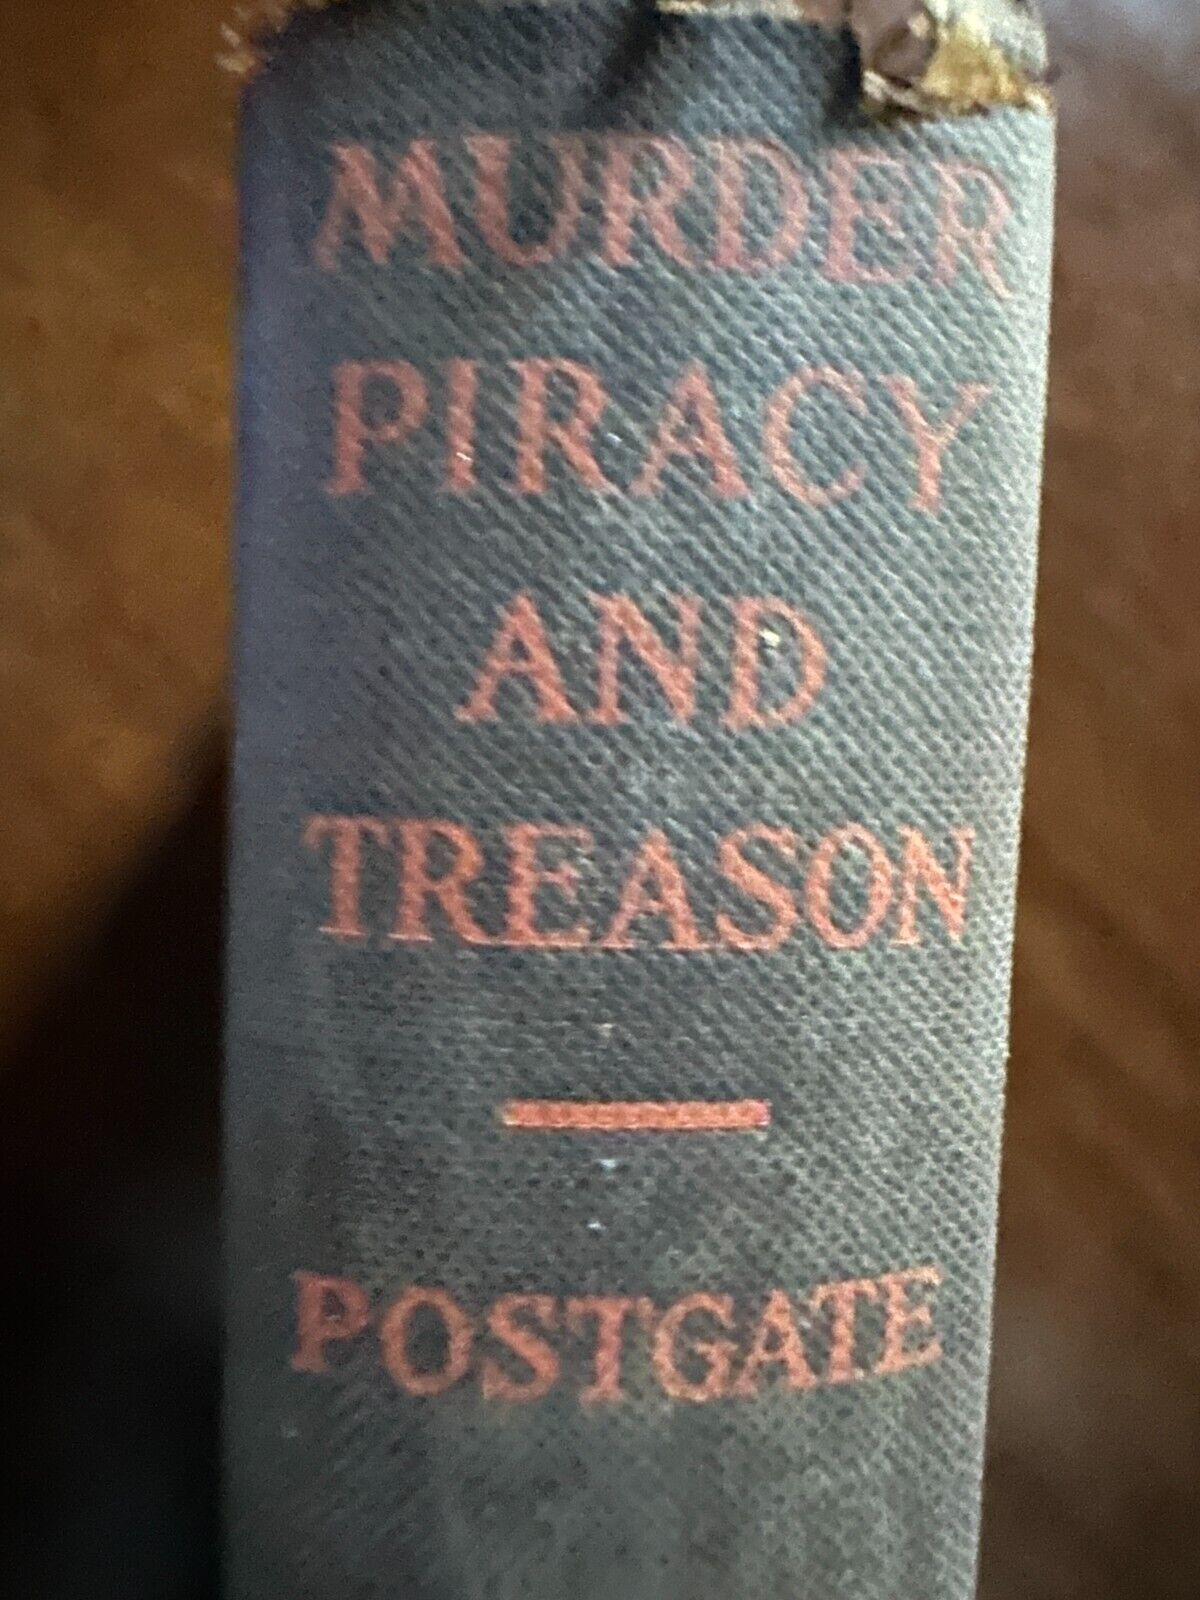 Murder Piracy and Treason by Raymond Postgate 1925